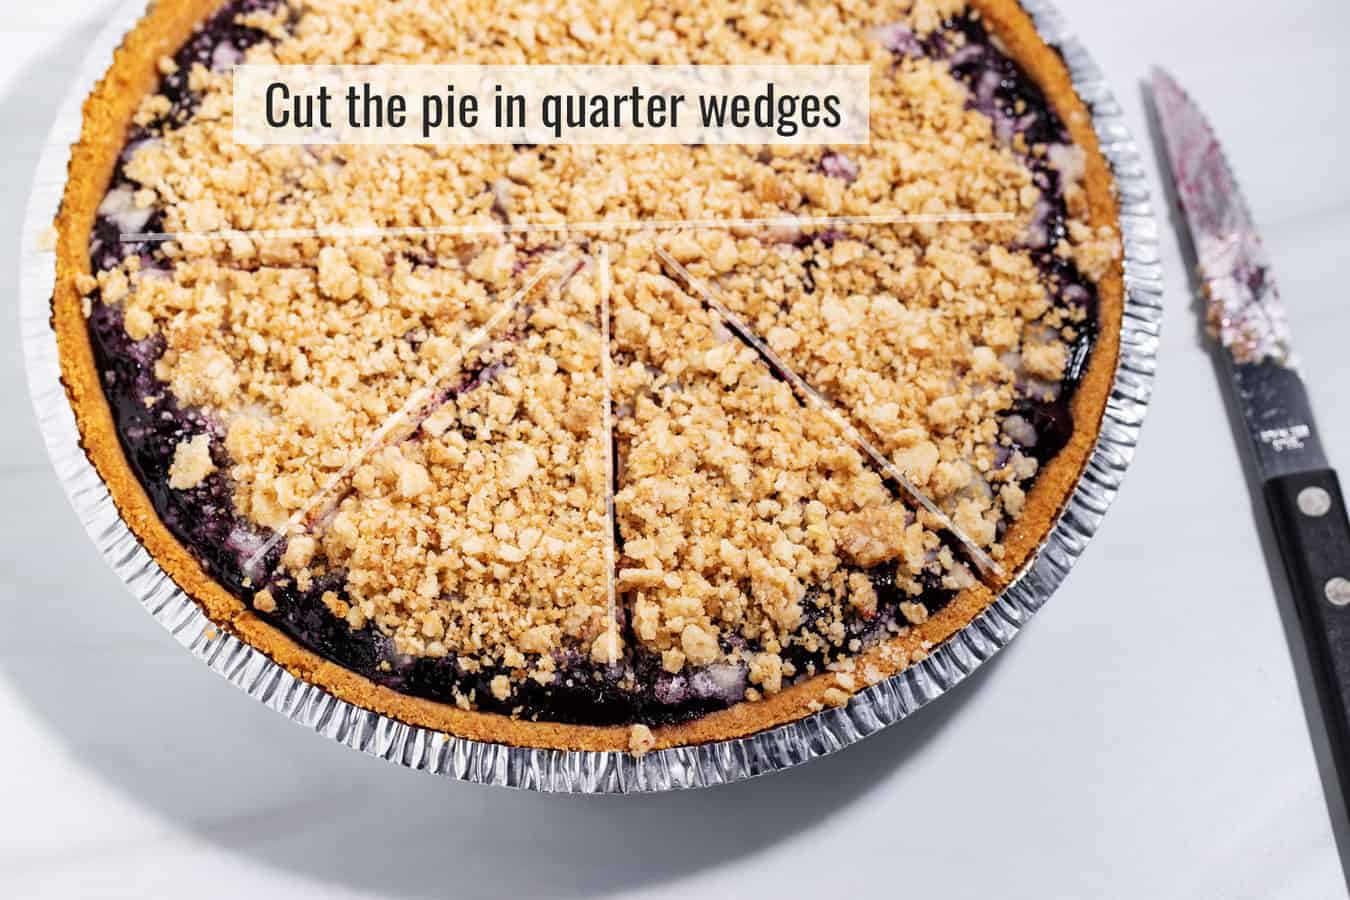 Cutting half a pie in quarter wedges.